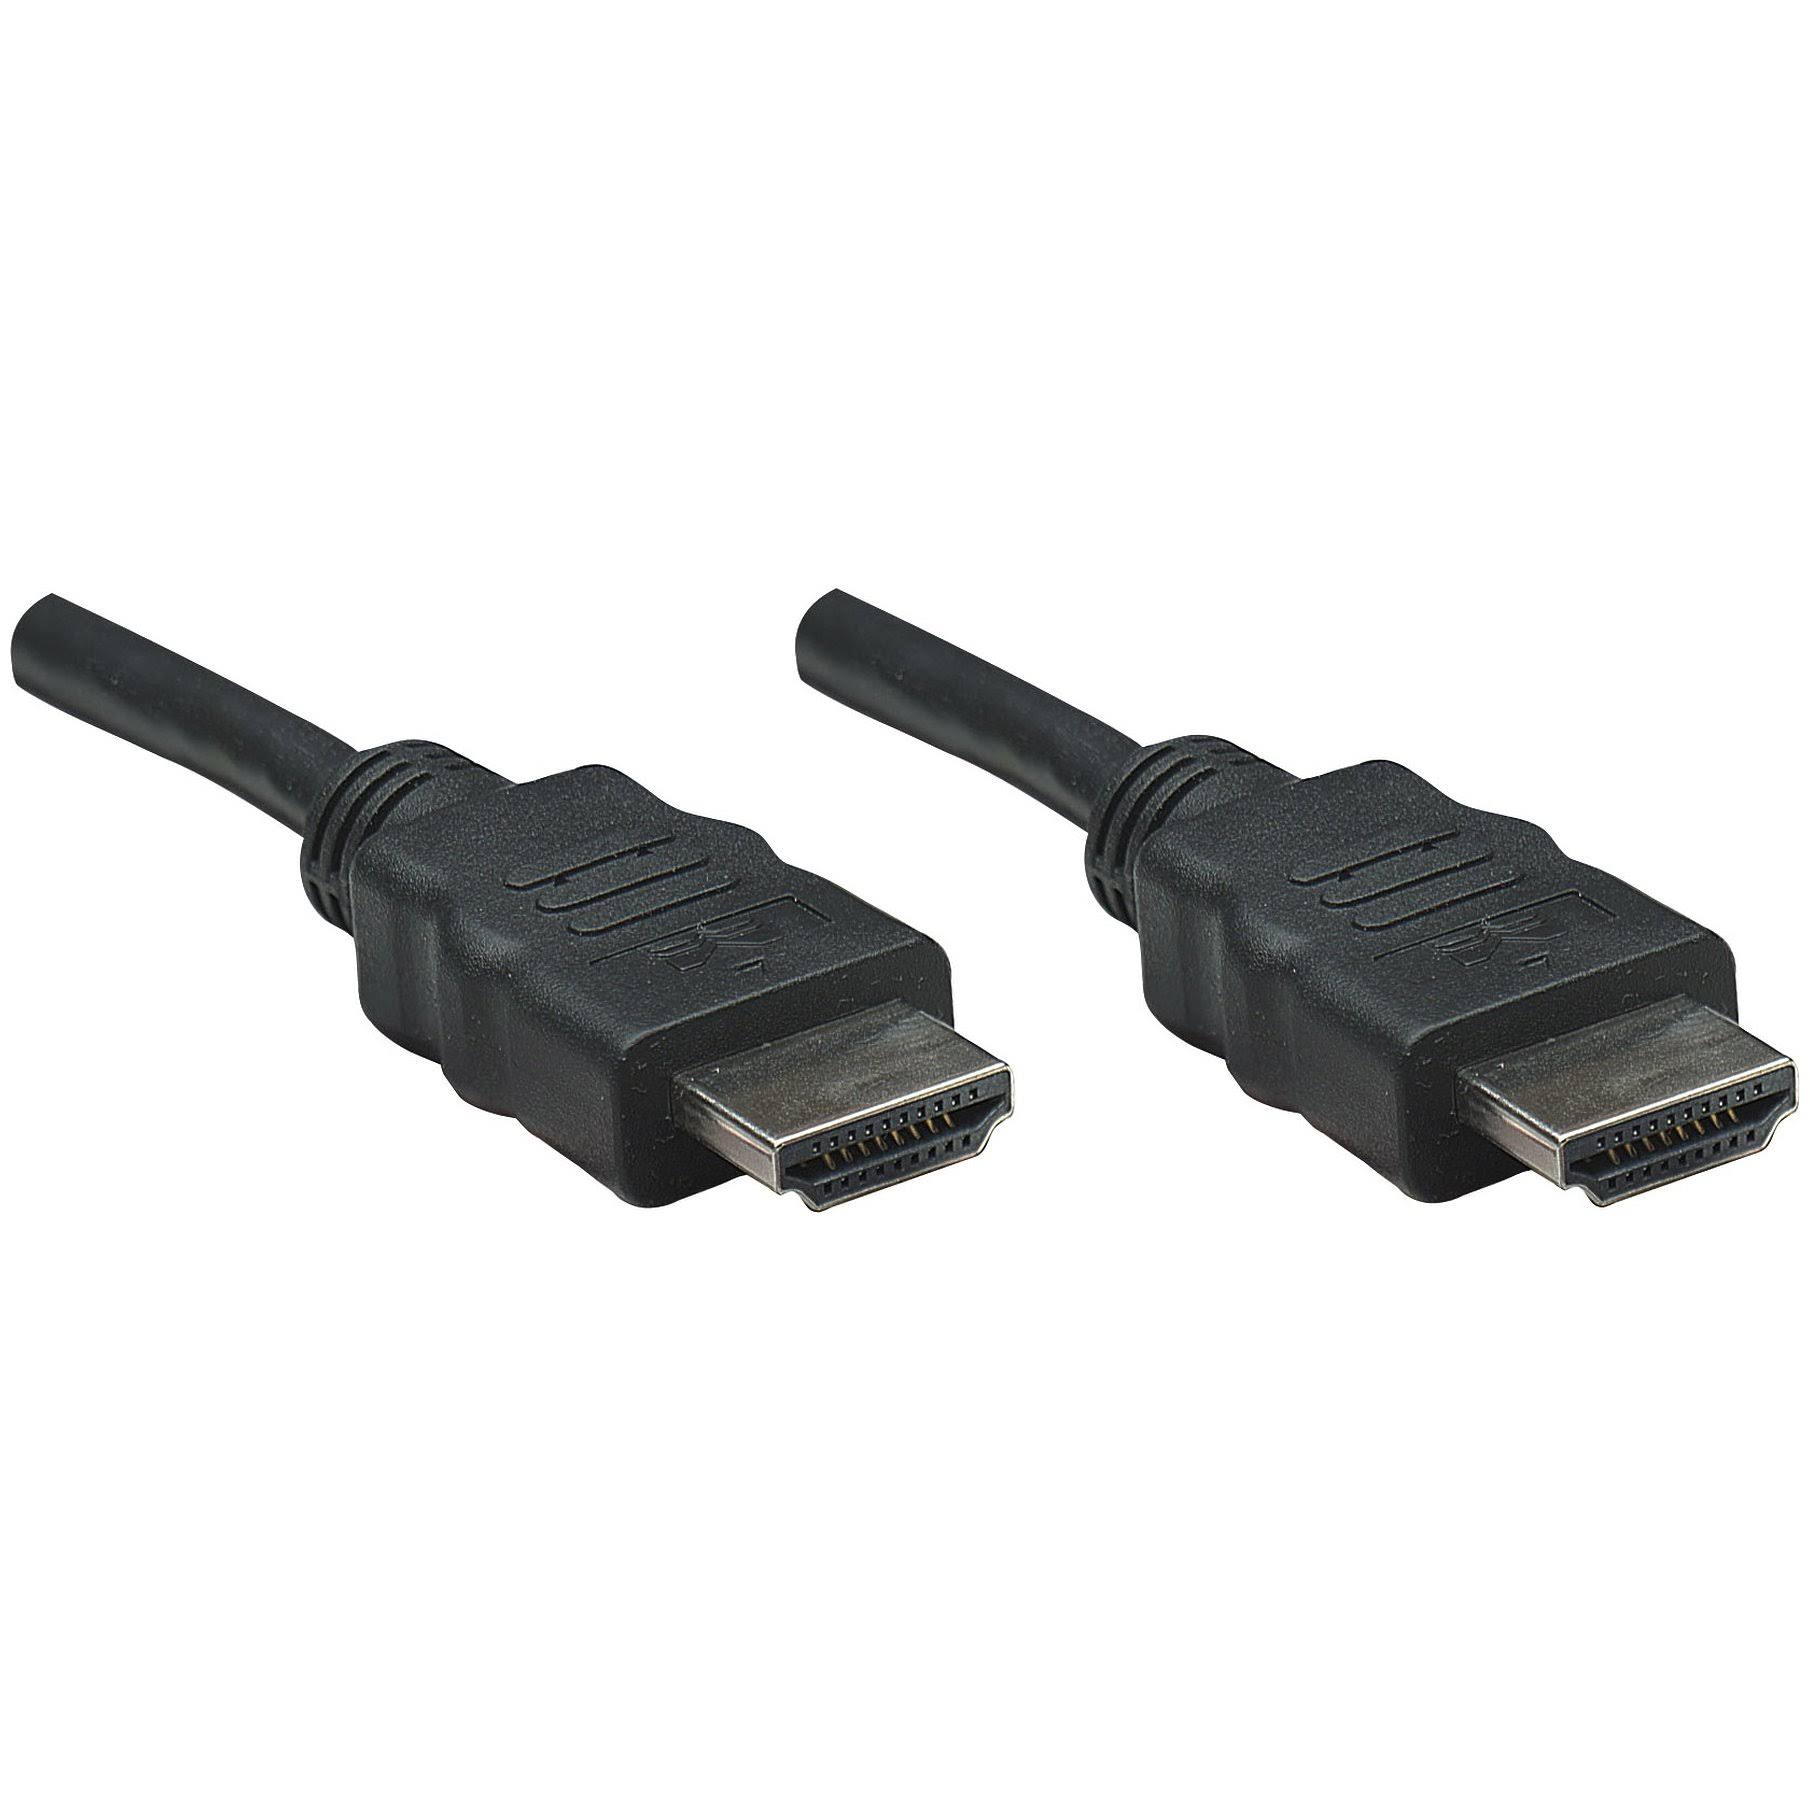 Manhattan High Speed HDMI Cable - Male/Male, Black, 5m